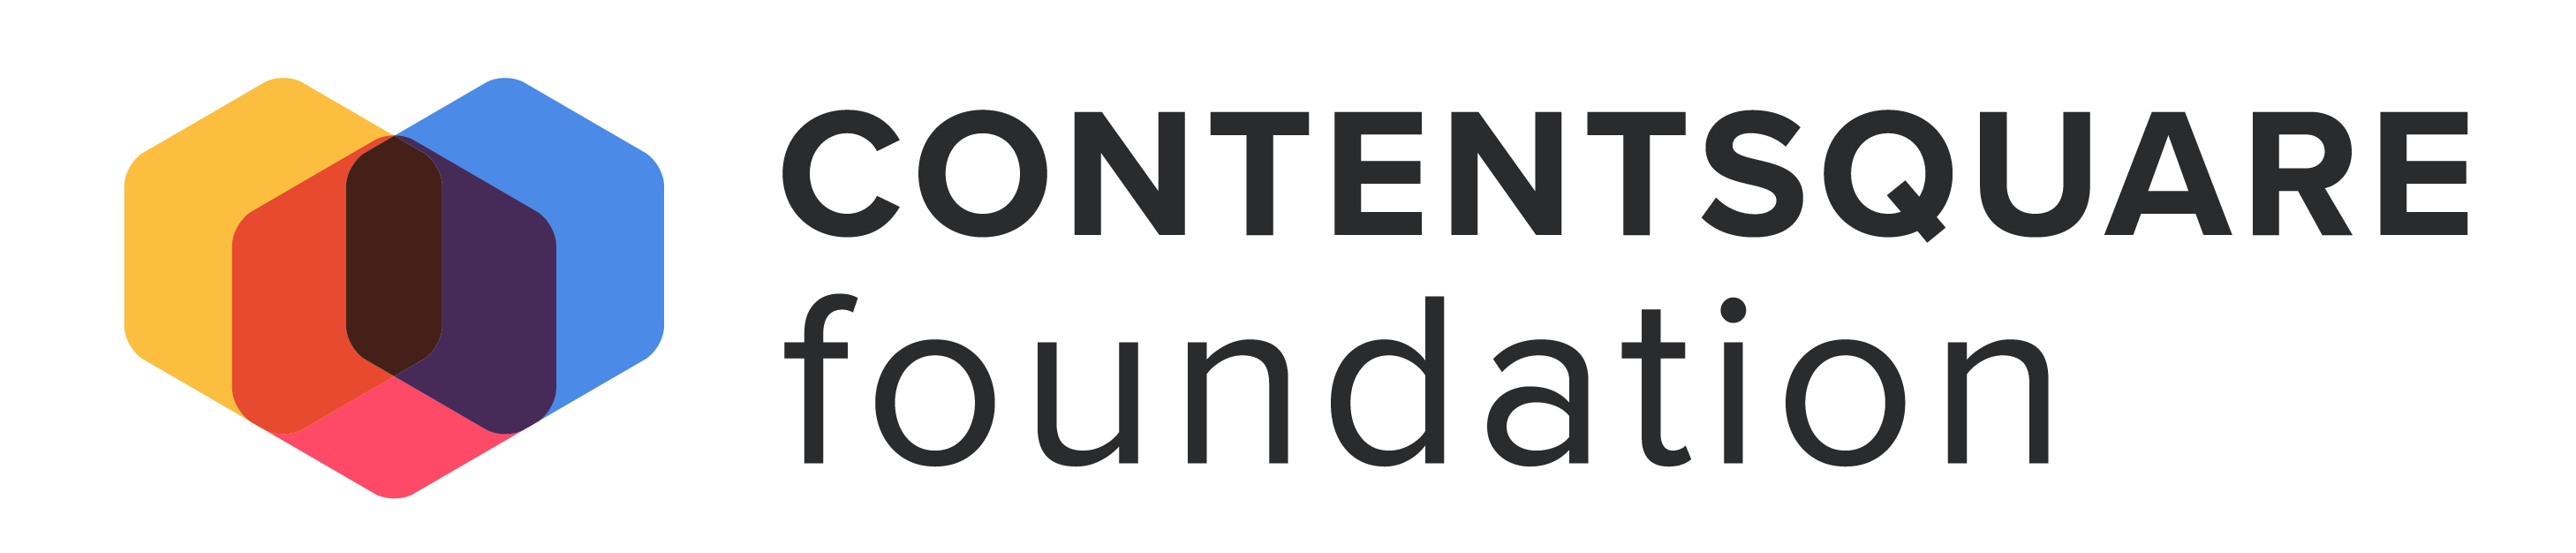 Logo Contentsquare Fondation